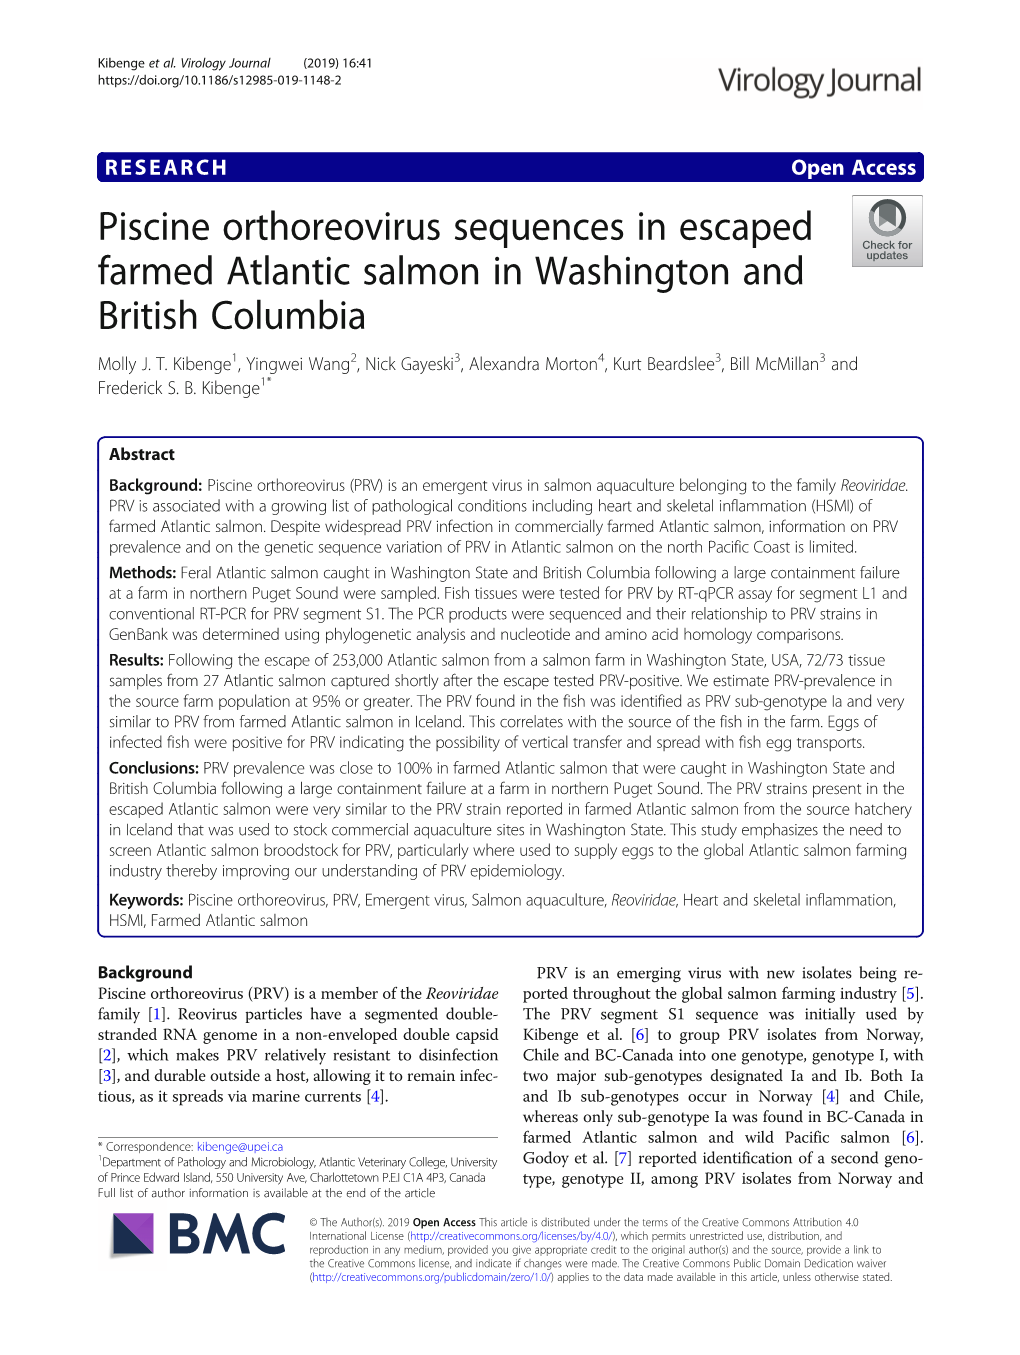 Piscine Orthoreovirus Sequences in Escaped Farmed Atlantic Salmon in Washington and British Columbia Molly J